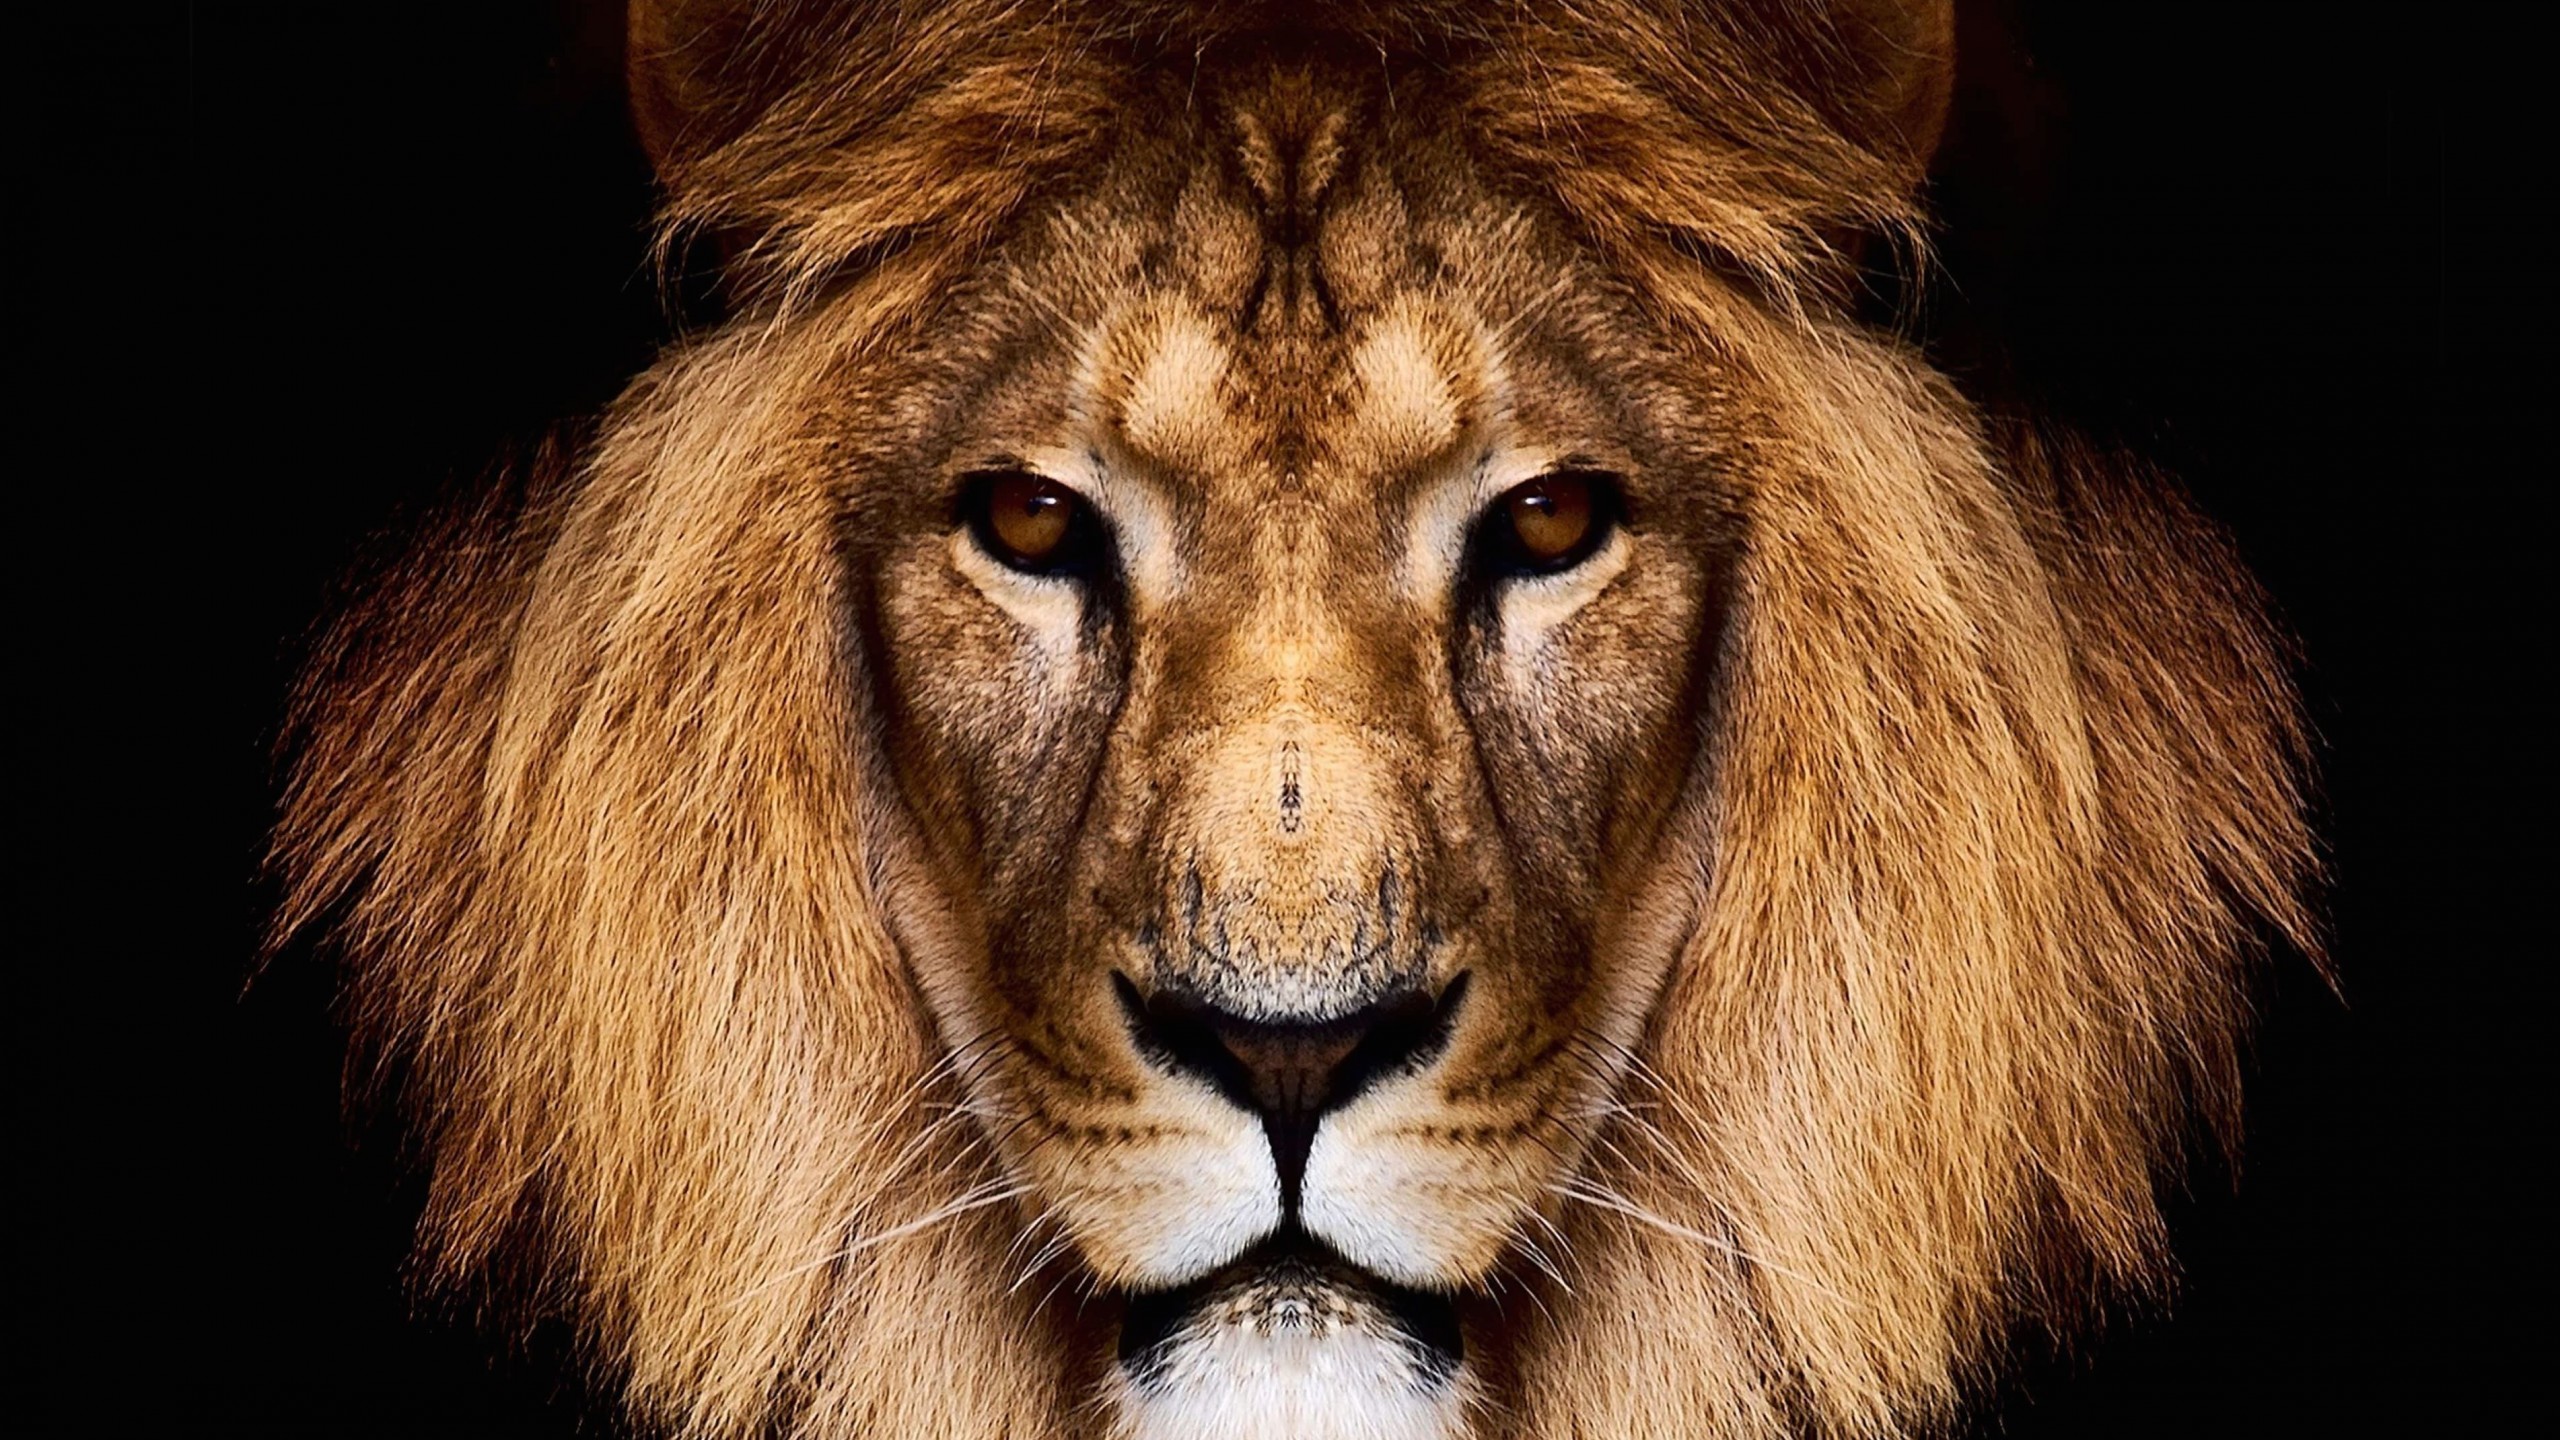 King Lion Wallpaper for Desktop 2560x1440